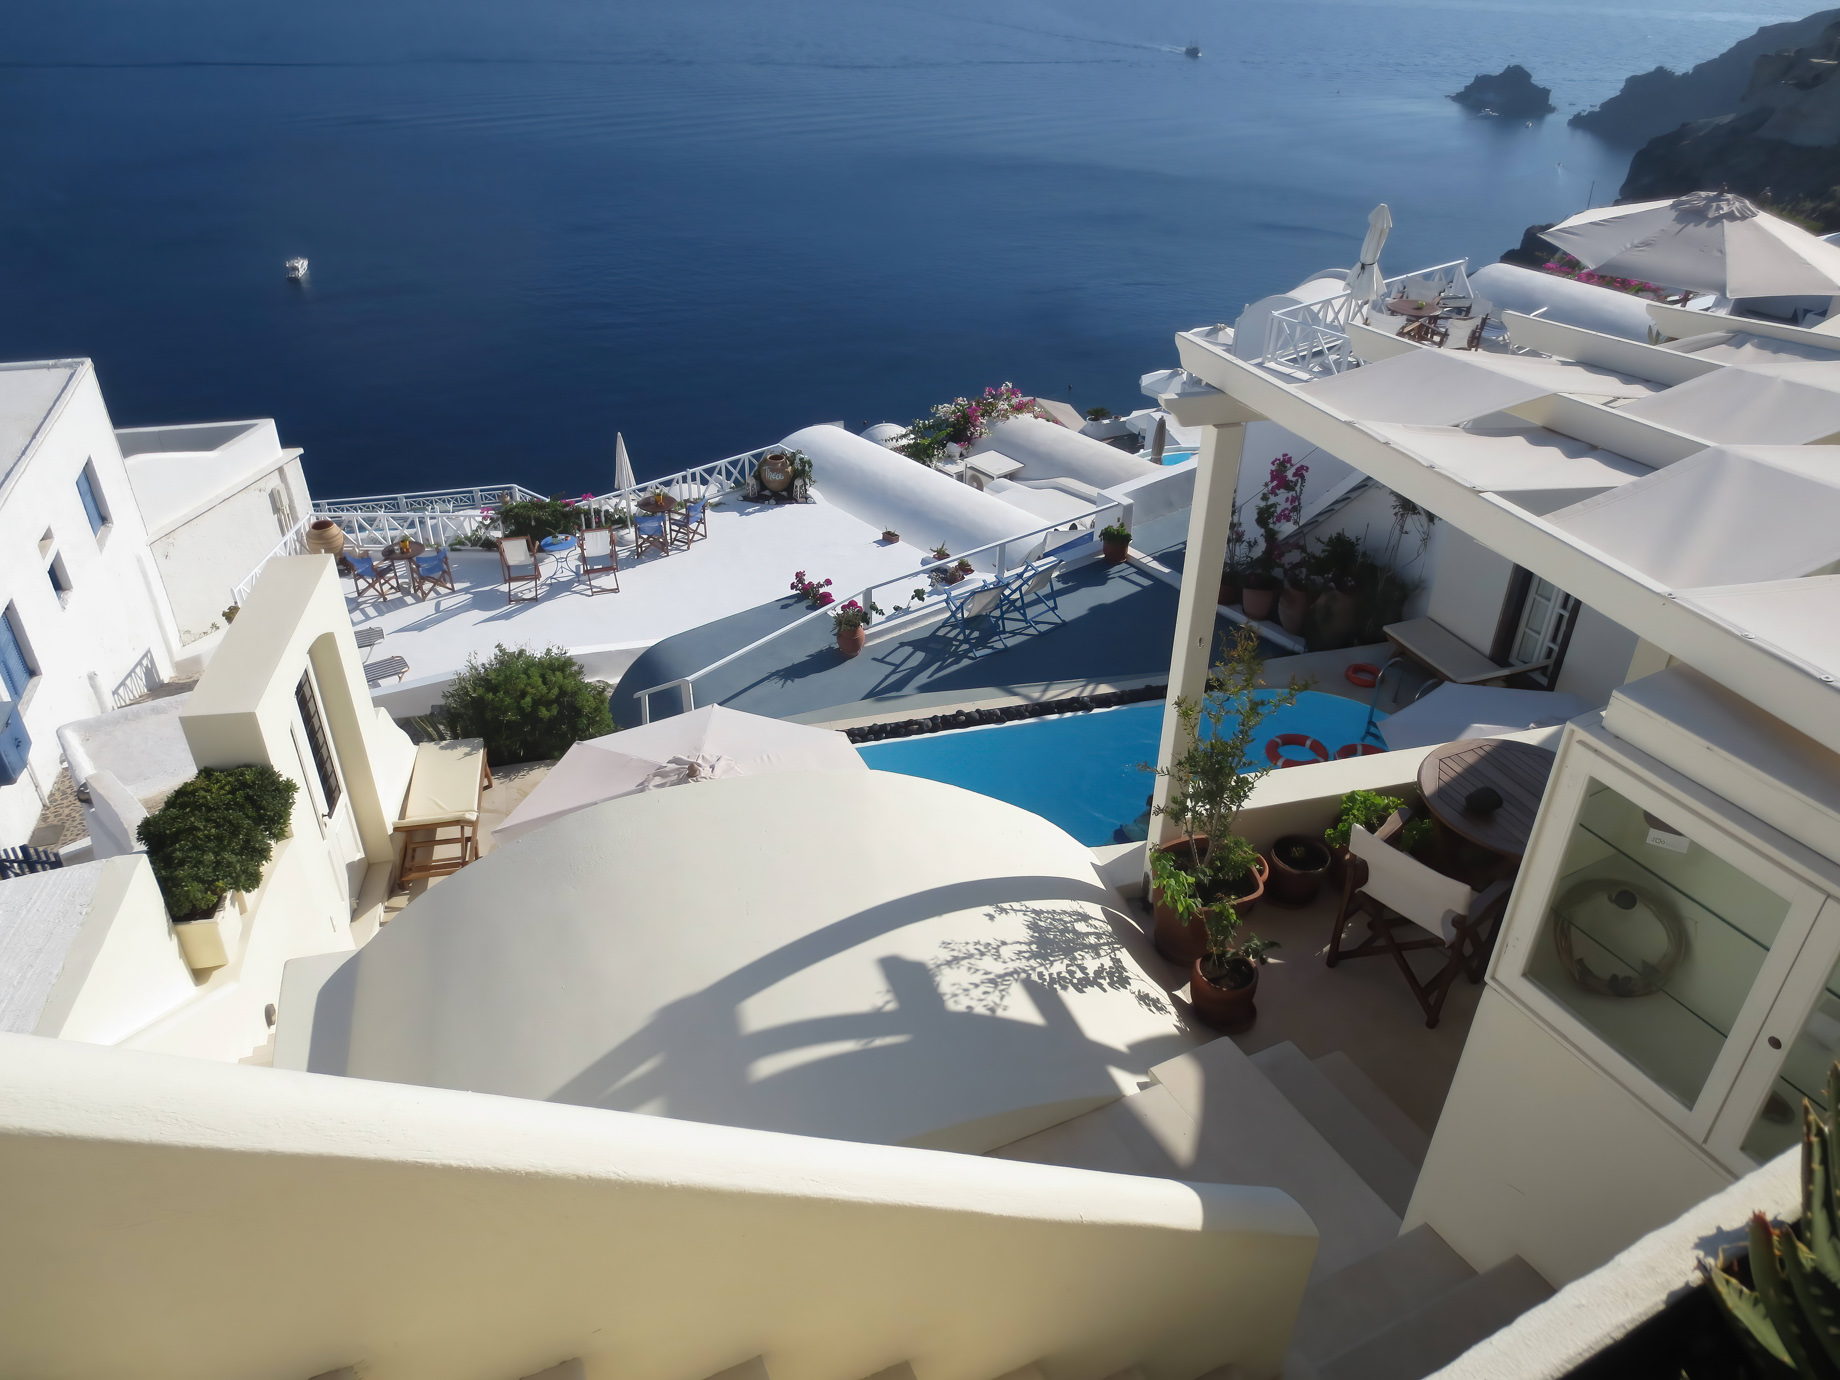 Mystique Hotel Santorini – Oia, Santorini Island, Greece - Mystique Ocean View Terraced Decks